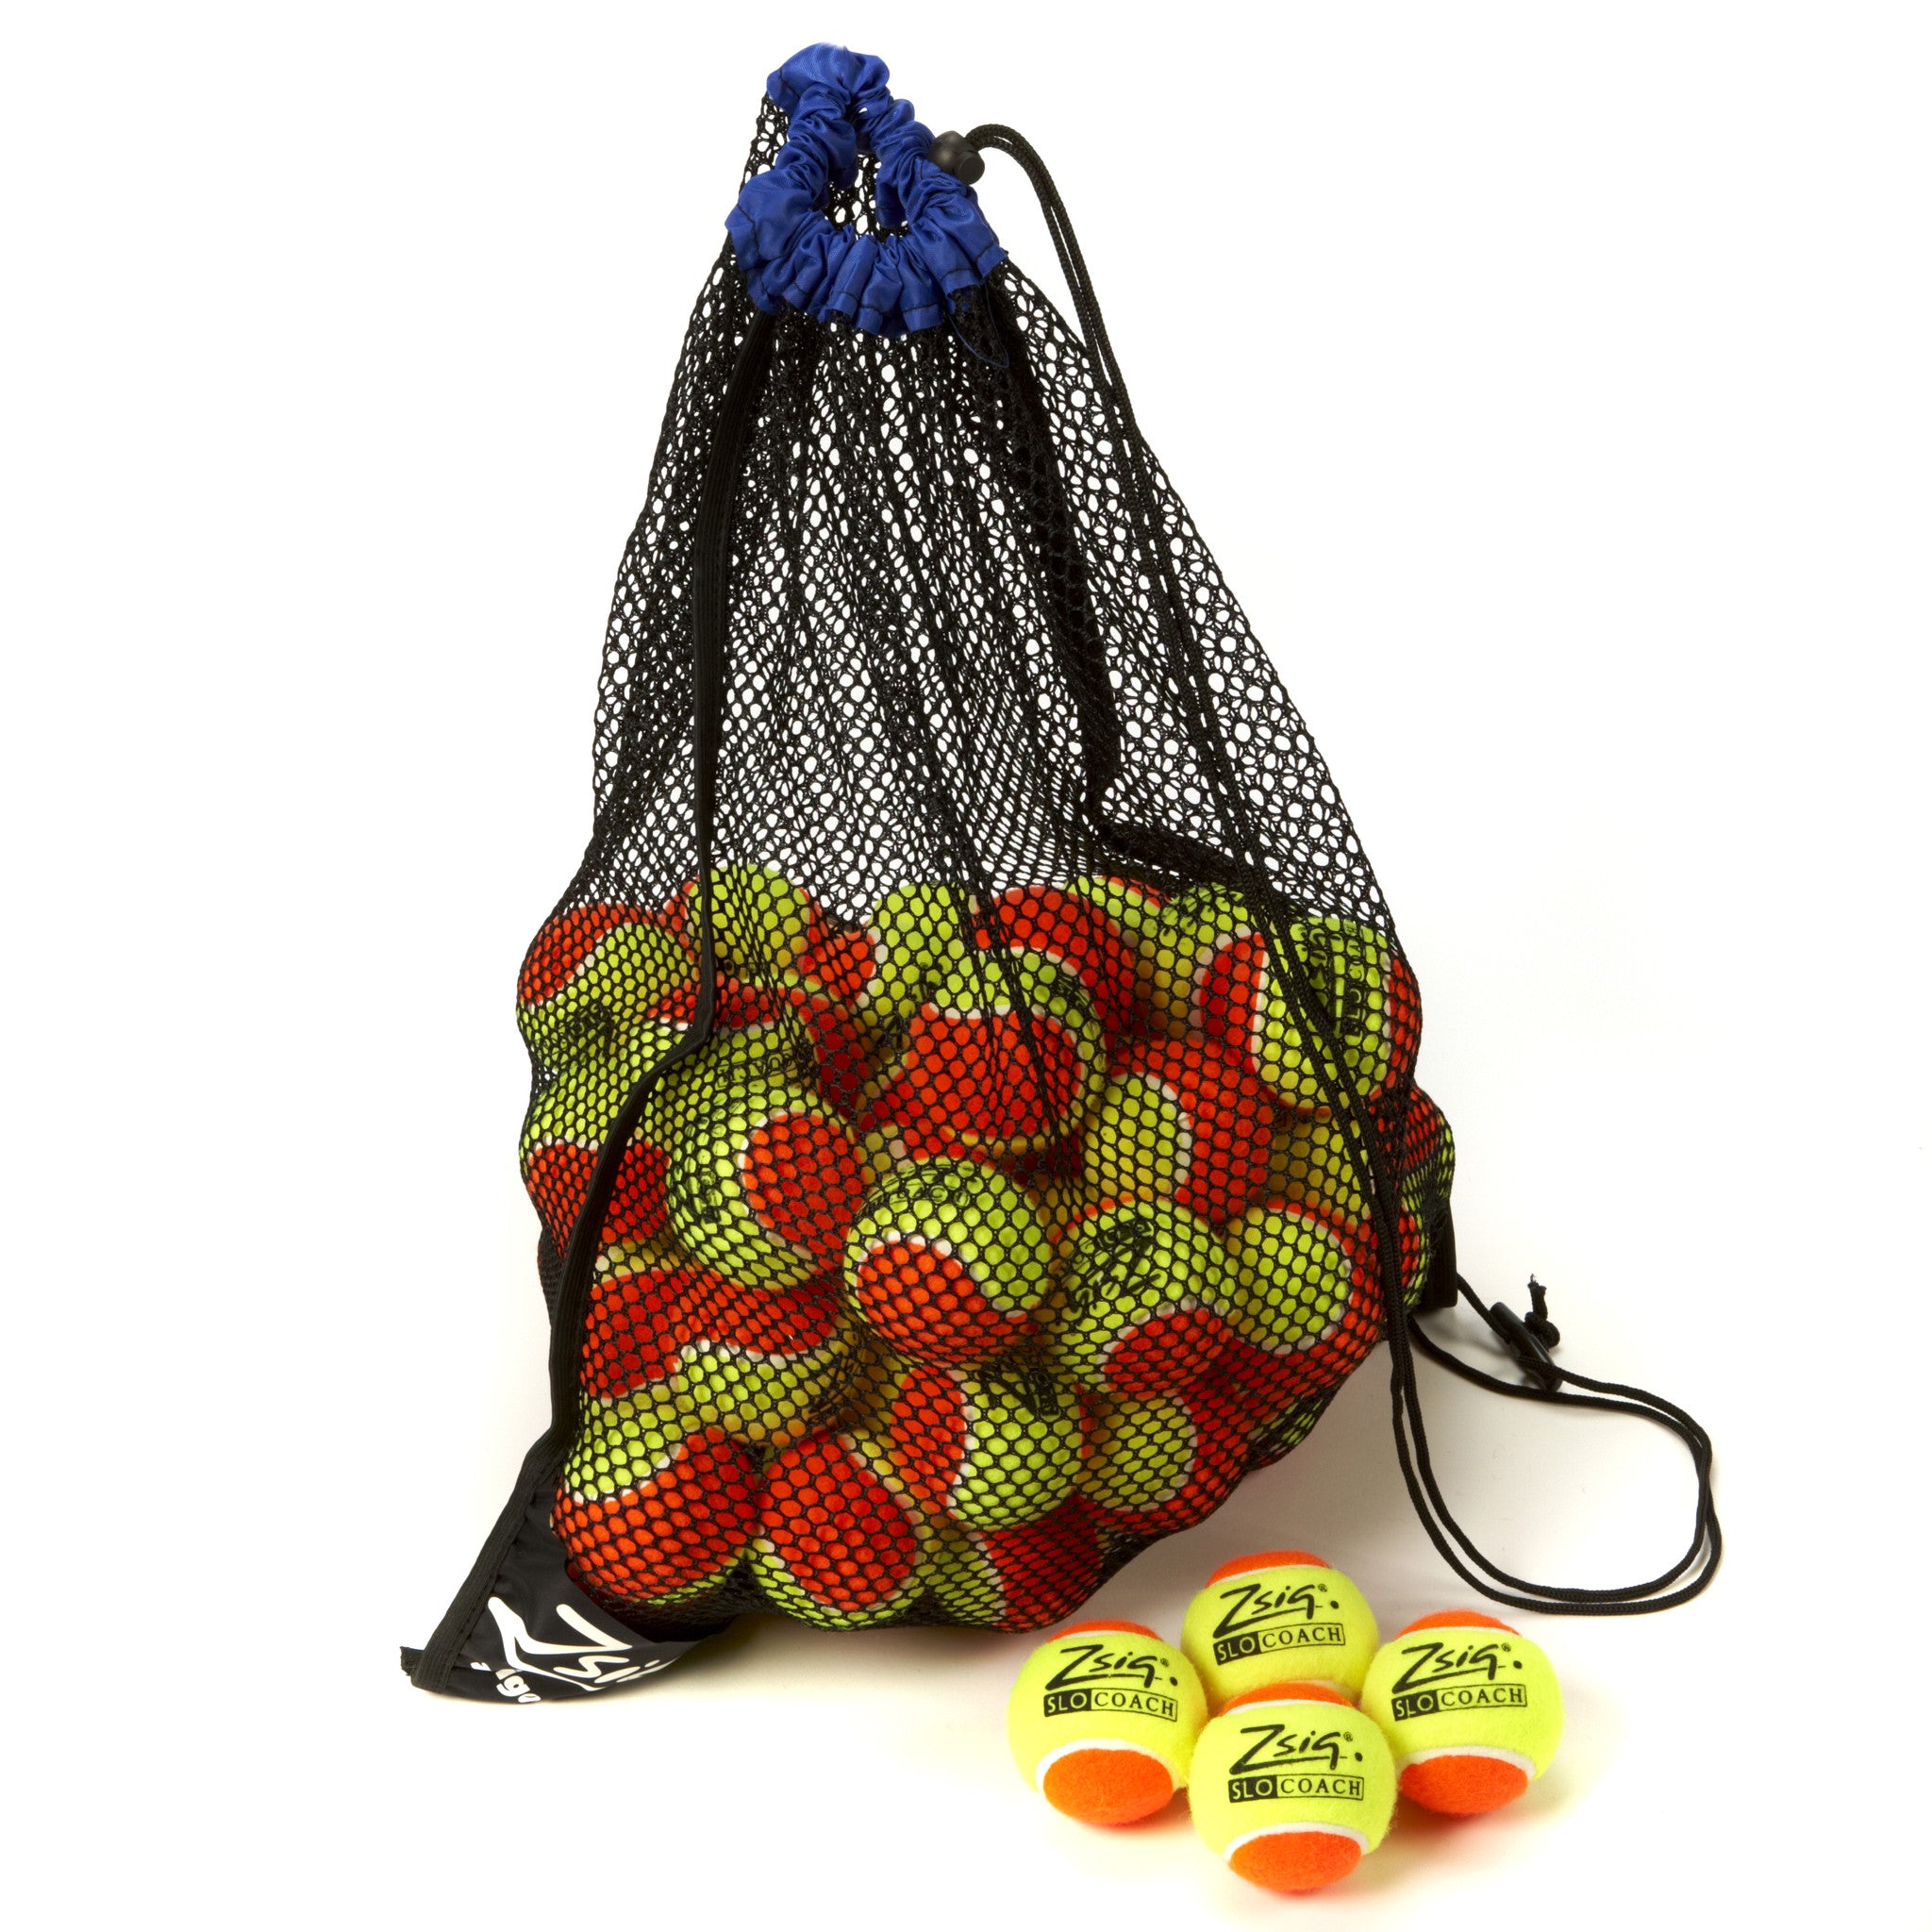 Zsig Slocoach Orange Mini Tennis Balls in a 5 dozen carry bag